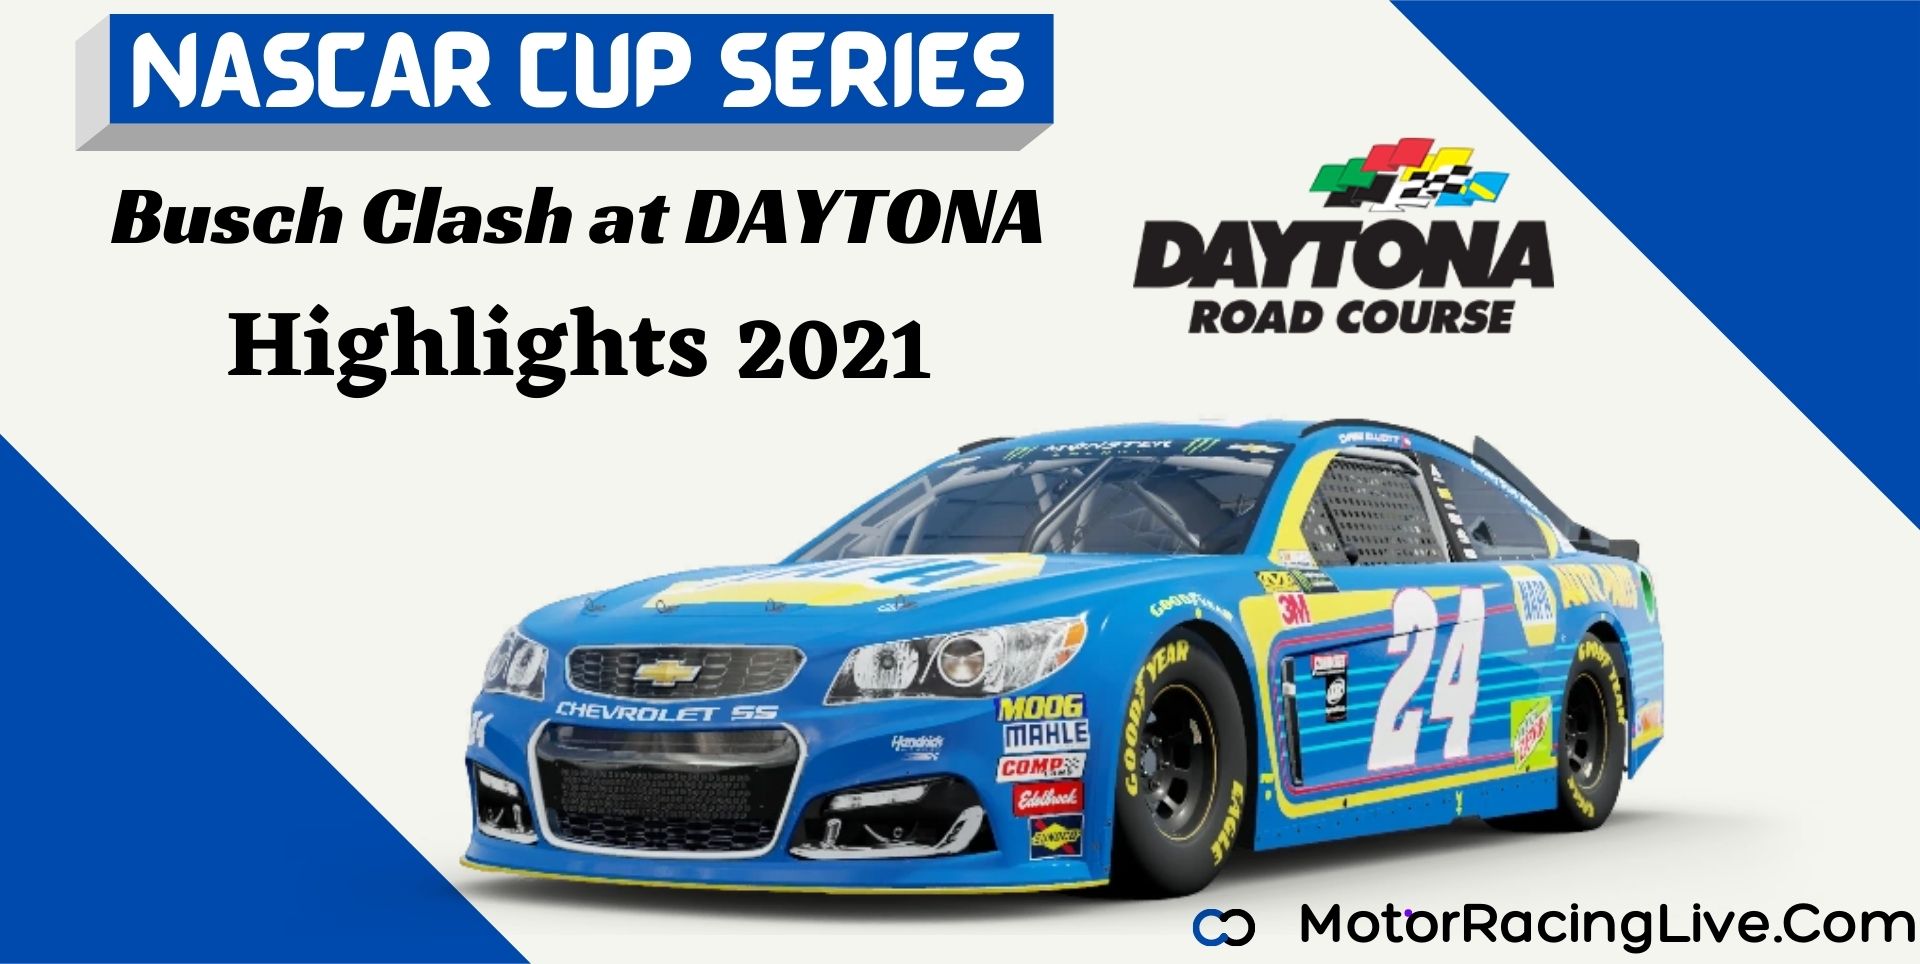 Busch Clash At DAYTONA Highlights 2021 NASCAR Cup